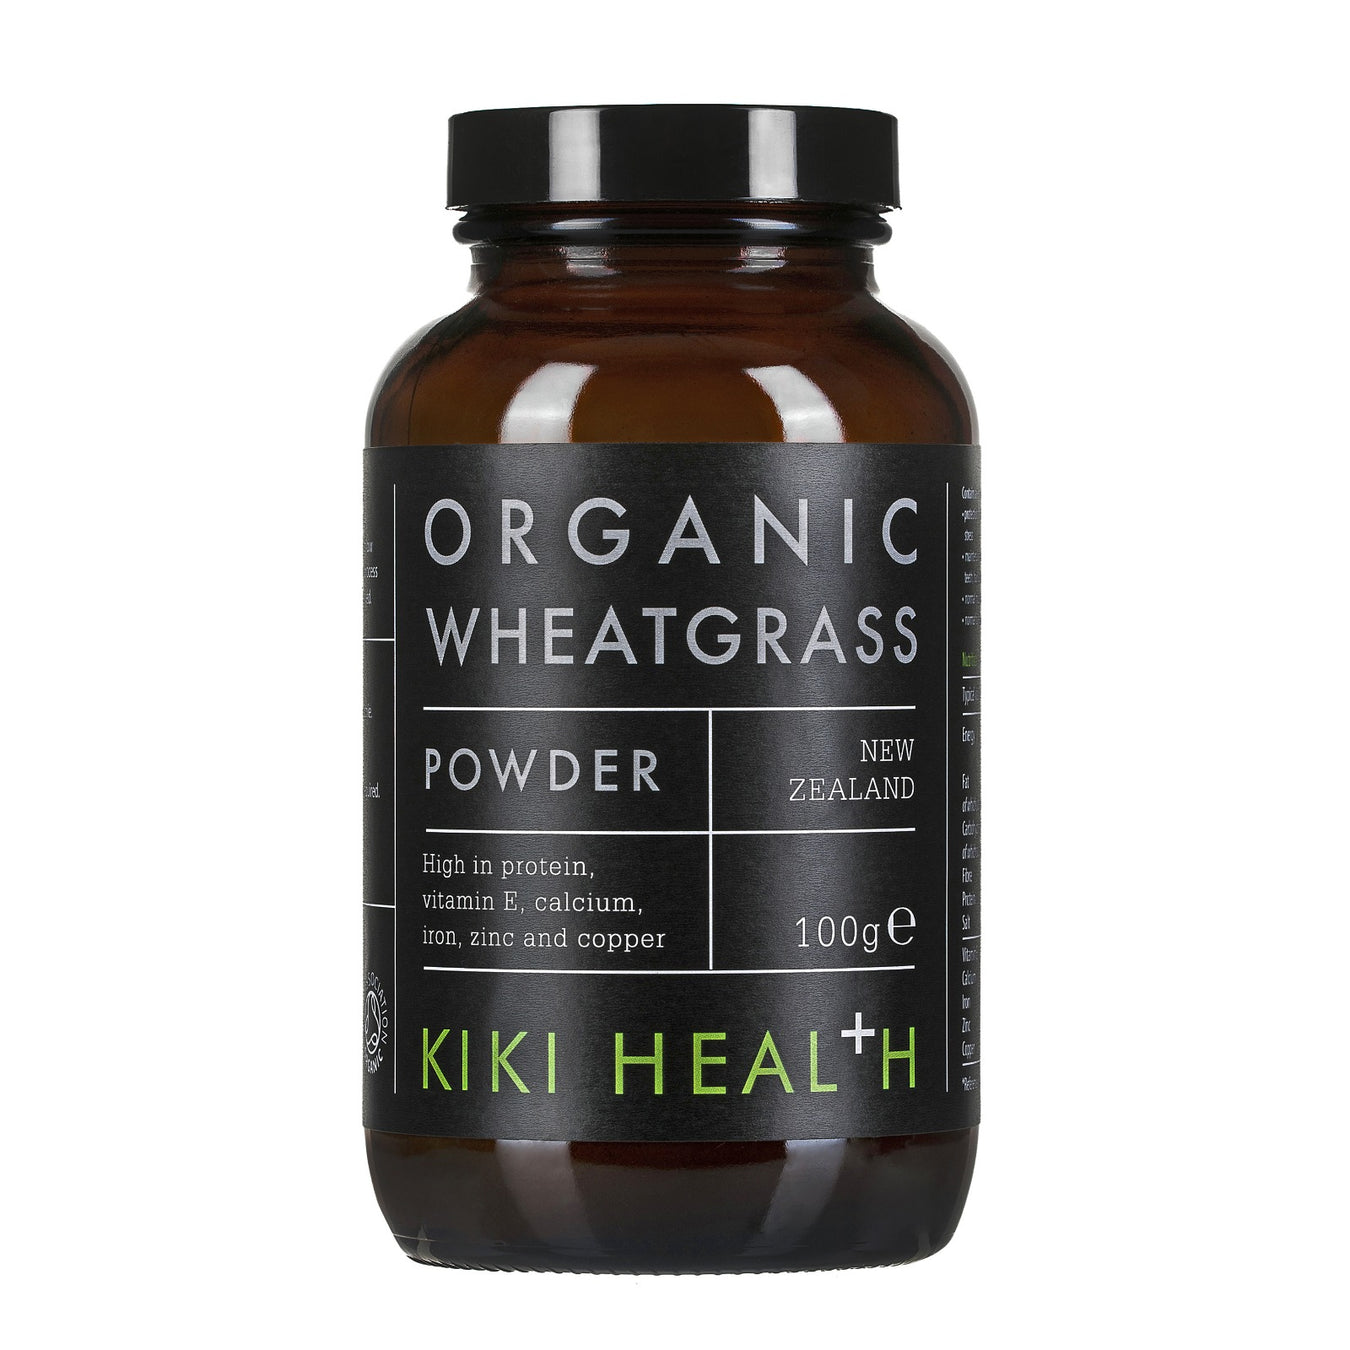 有機小麥草粉 Kiki Health Organic Premium Wheatgrass Powder (100g)